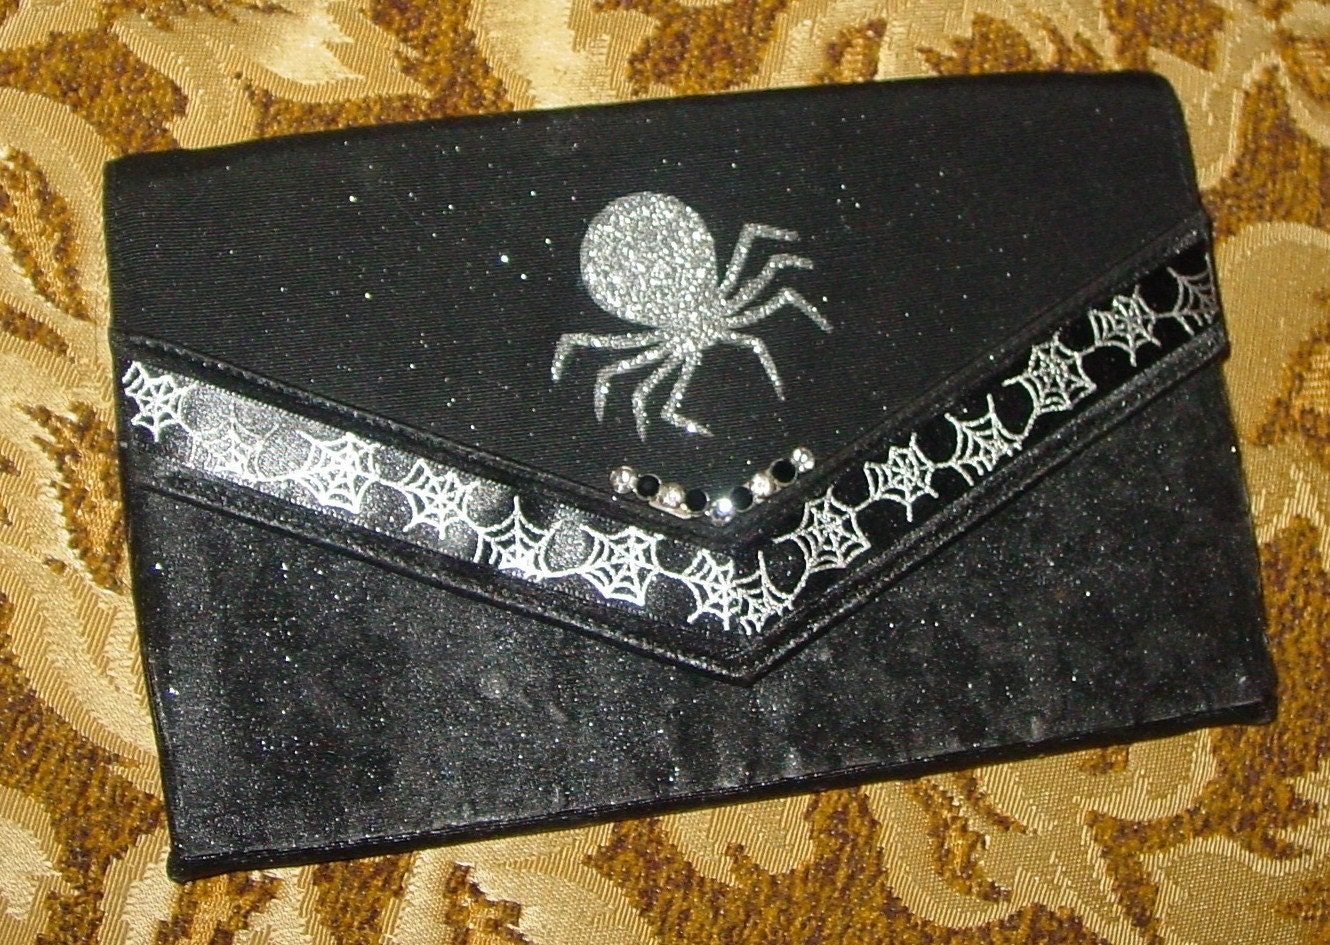 HANDMADE HALLOWEEN black spider purse EVERY WITCH NEEDS one